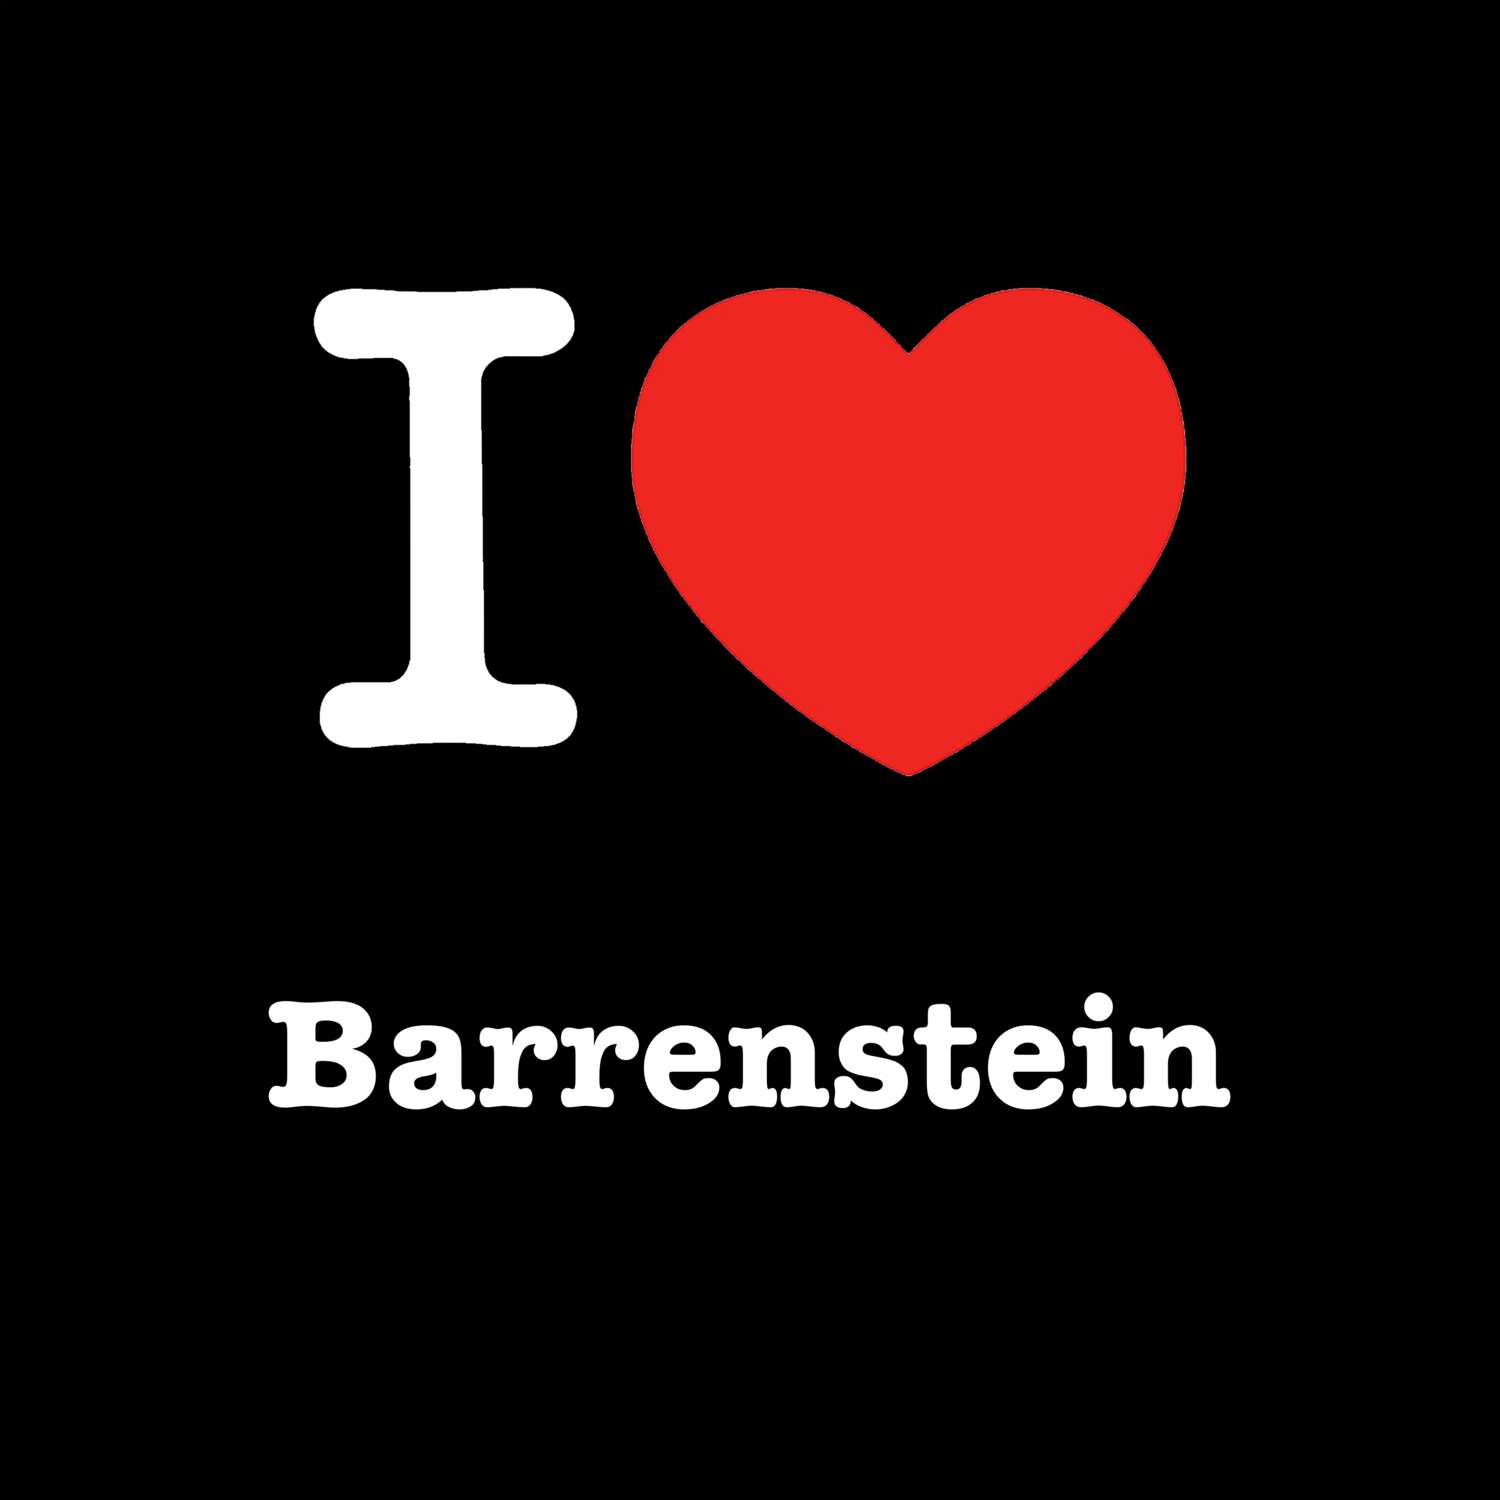 Barrenstein T-Shirt »I love«